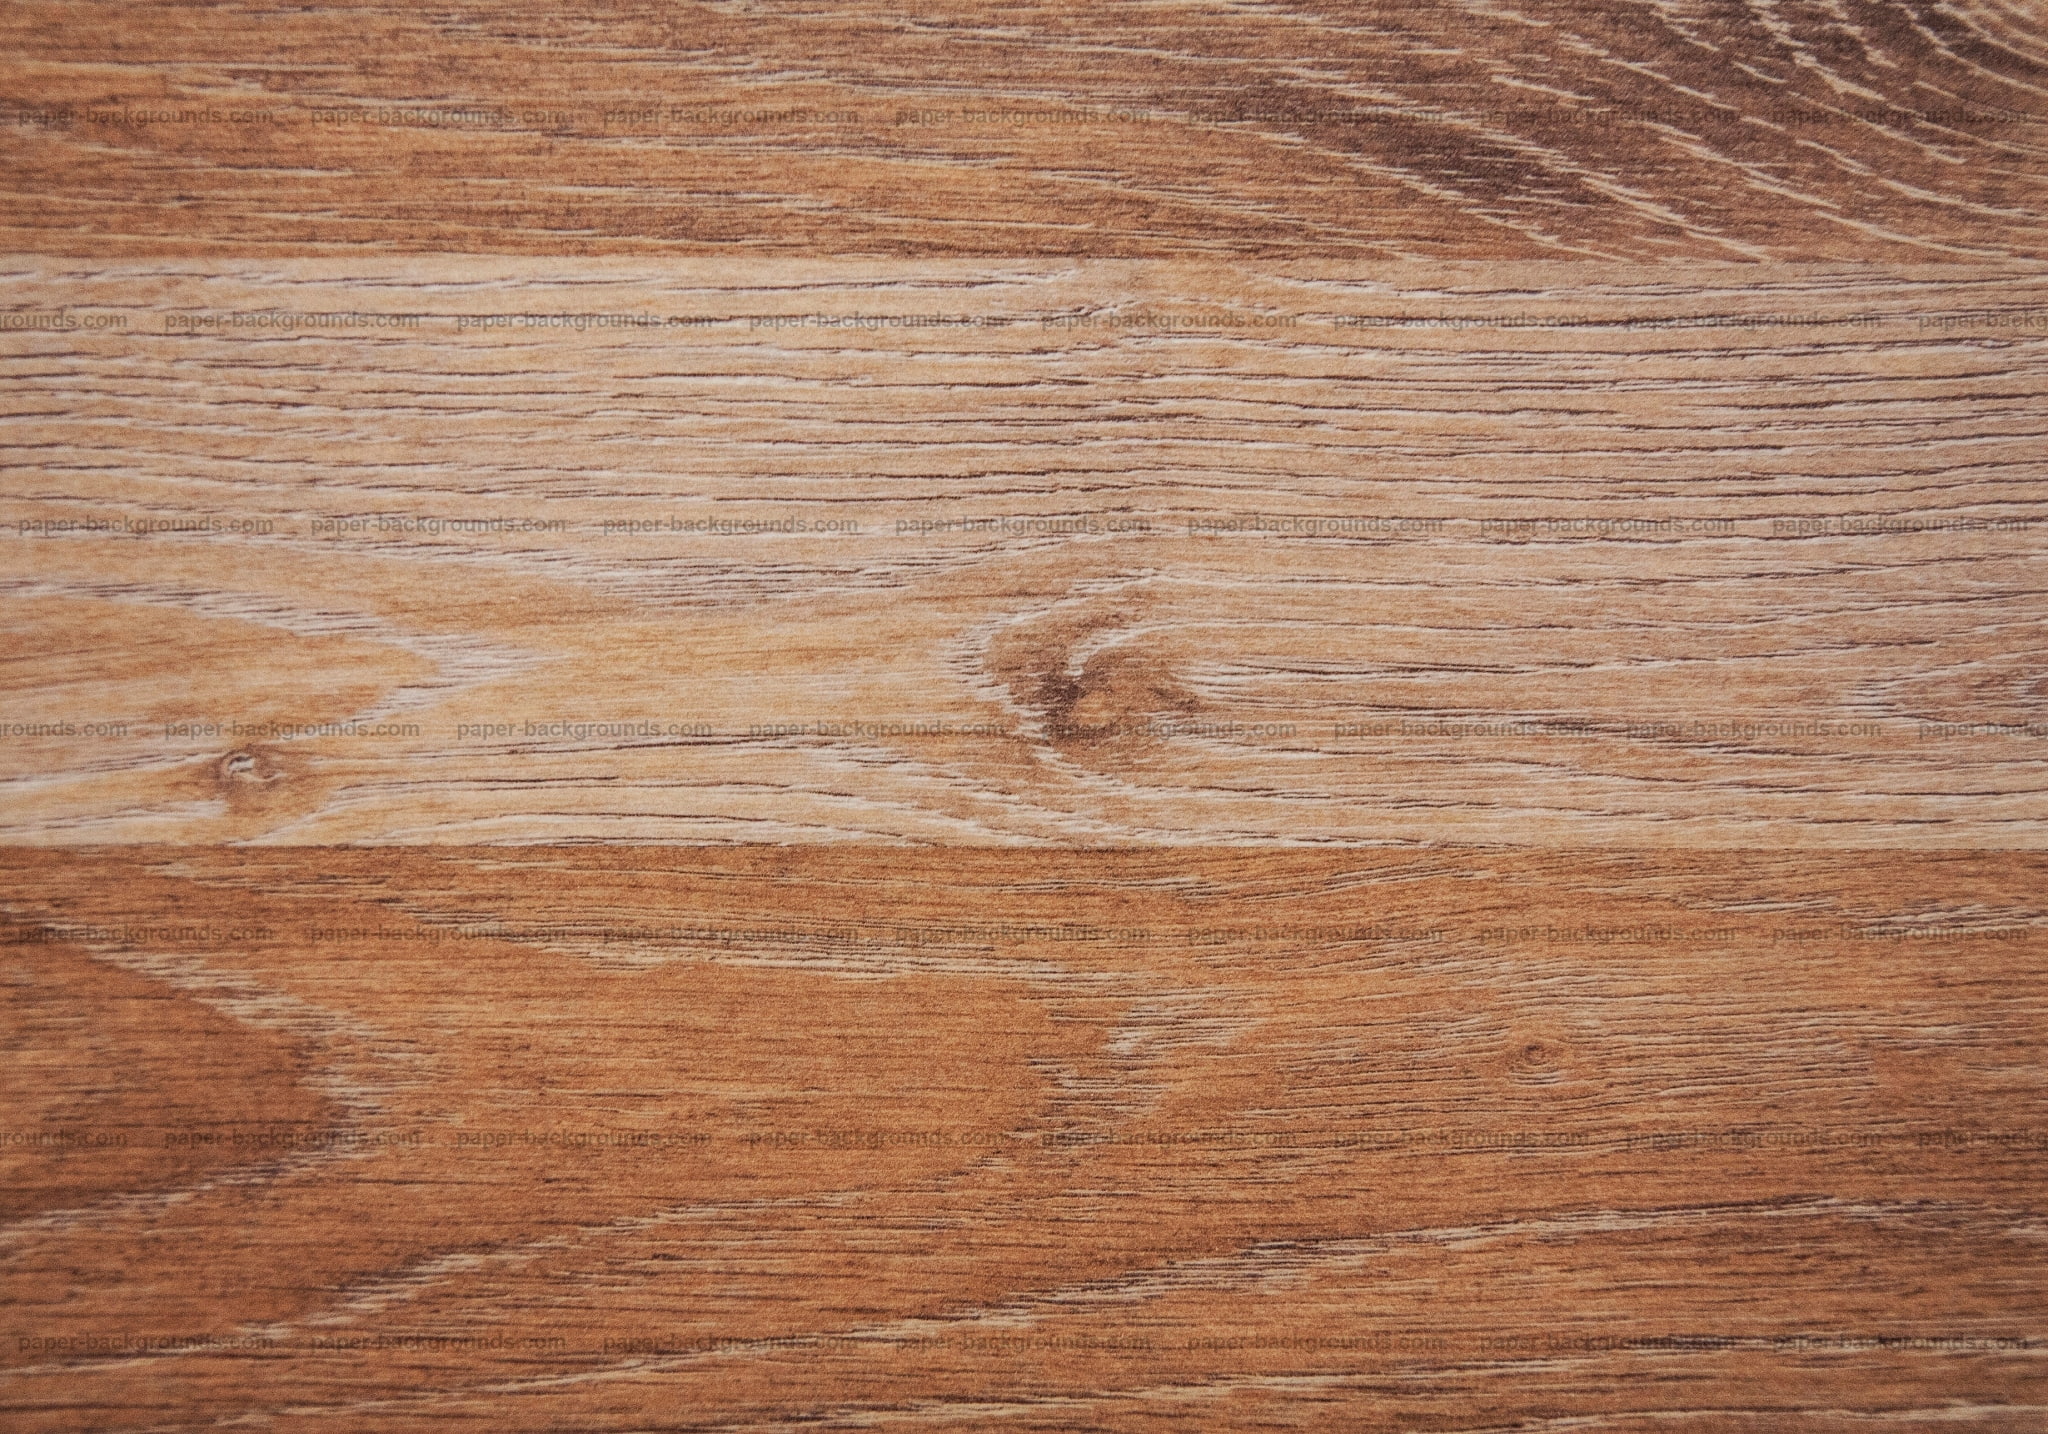 wood high resolution desktop backgrounds, wood - material, wood grain